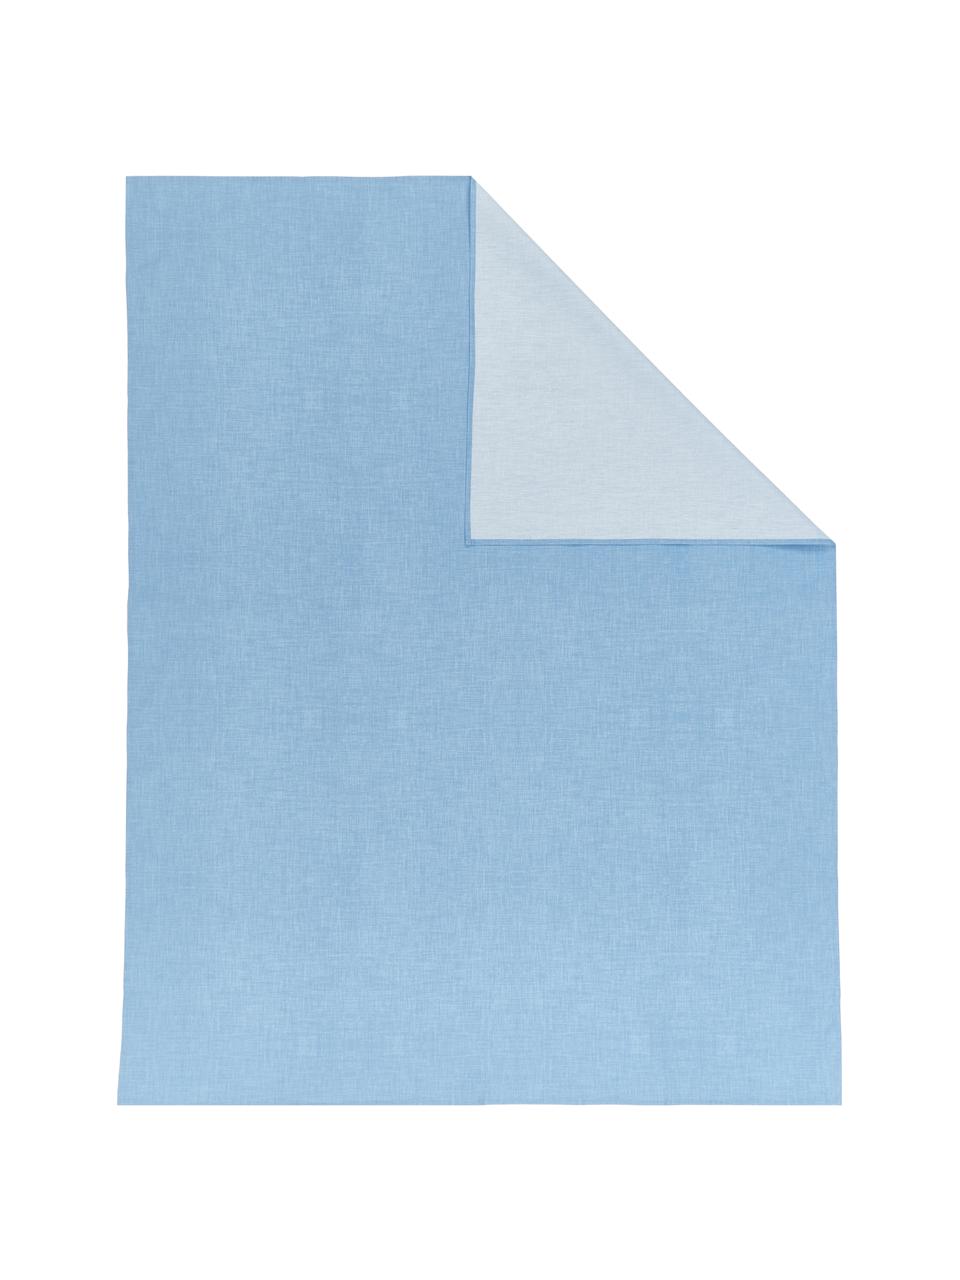 Mantel Alla antimanchas resinado, 50% algodón, 50% poliéster con revestimiento de resina, Azul, De 8 a 10 comensales (An 140 x L 280 cm)